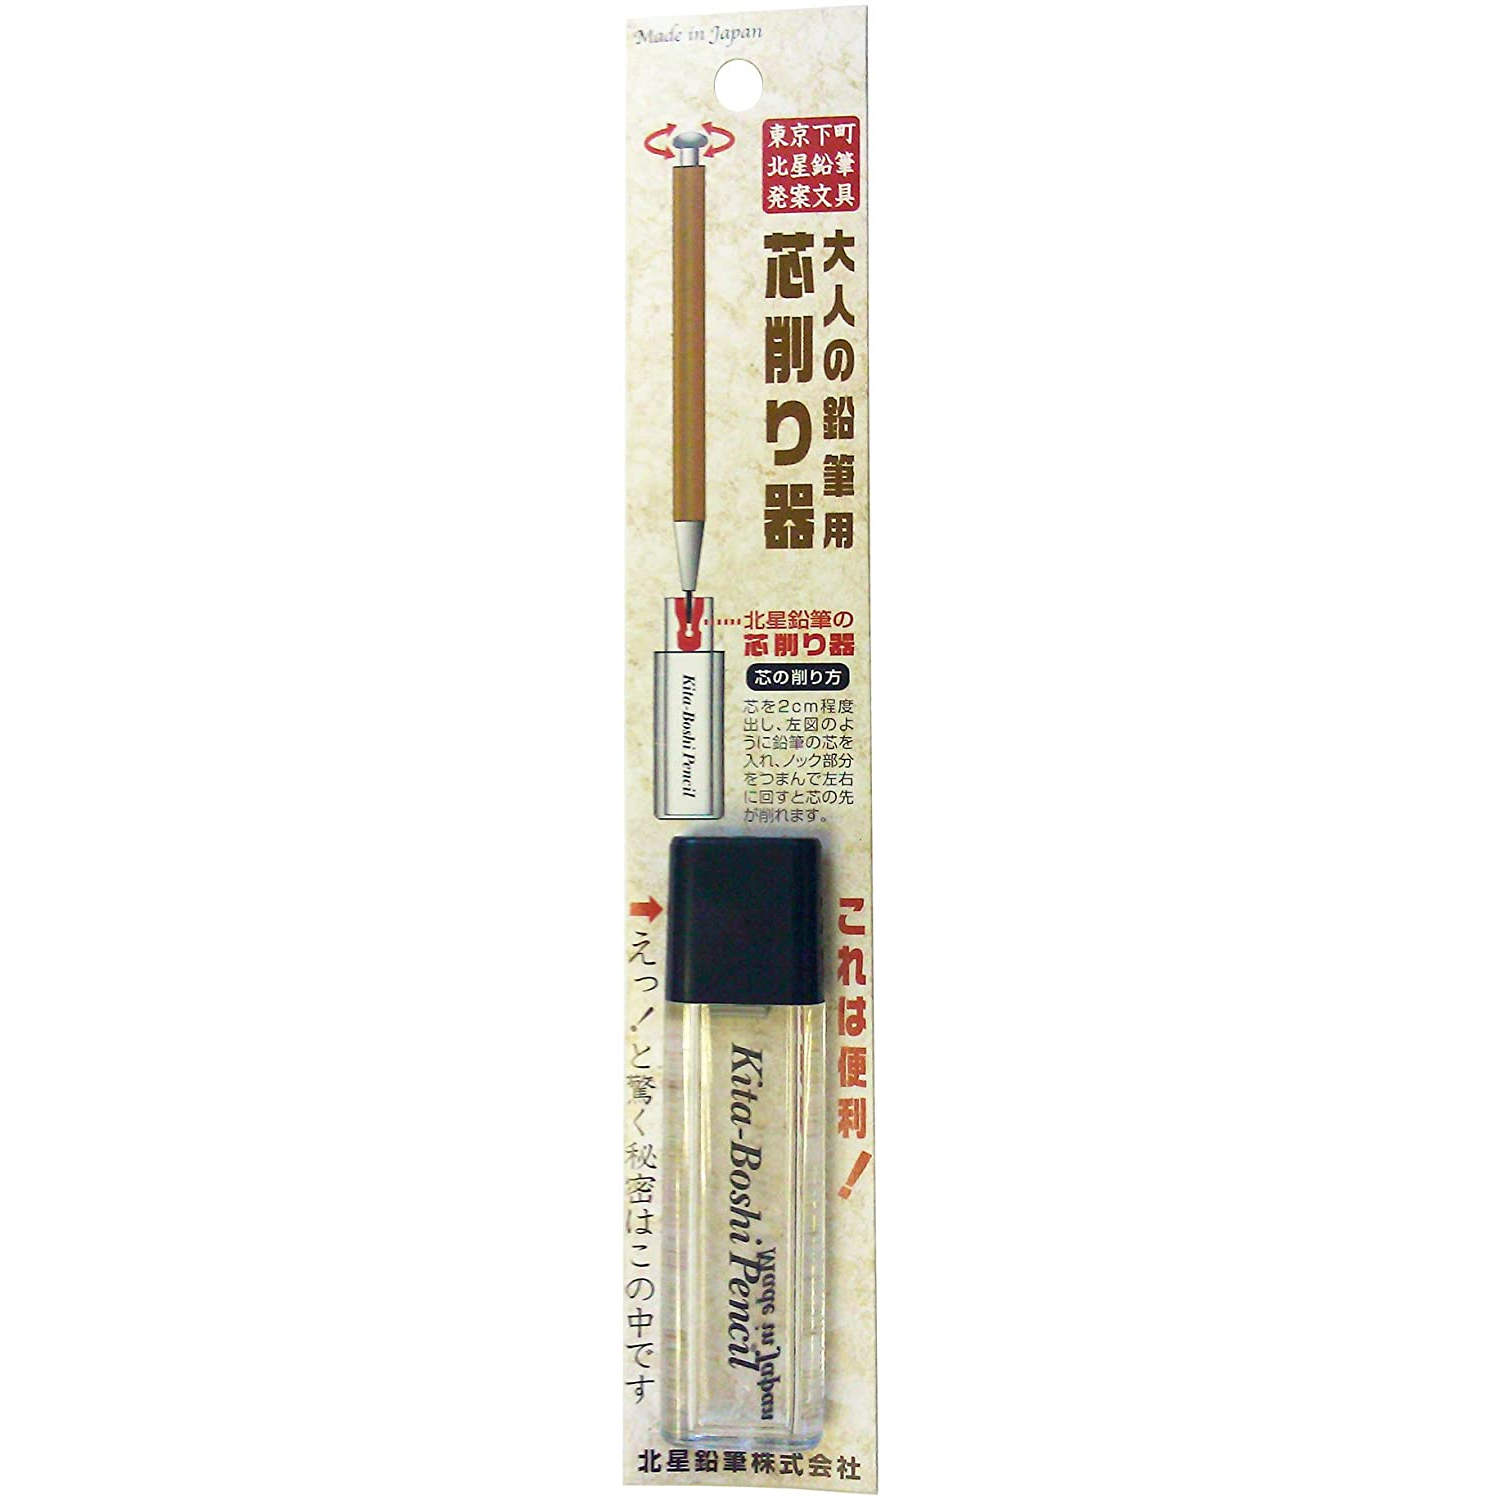 Kita-Boshi OTONA pencil 2mm lead sharpener – Manga Arts and Comic Art Gear